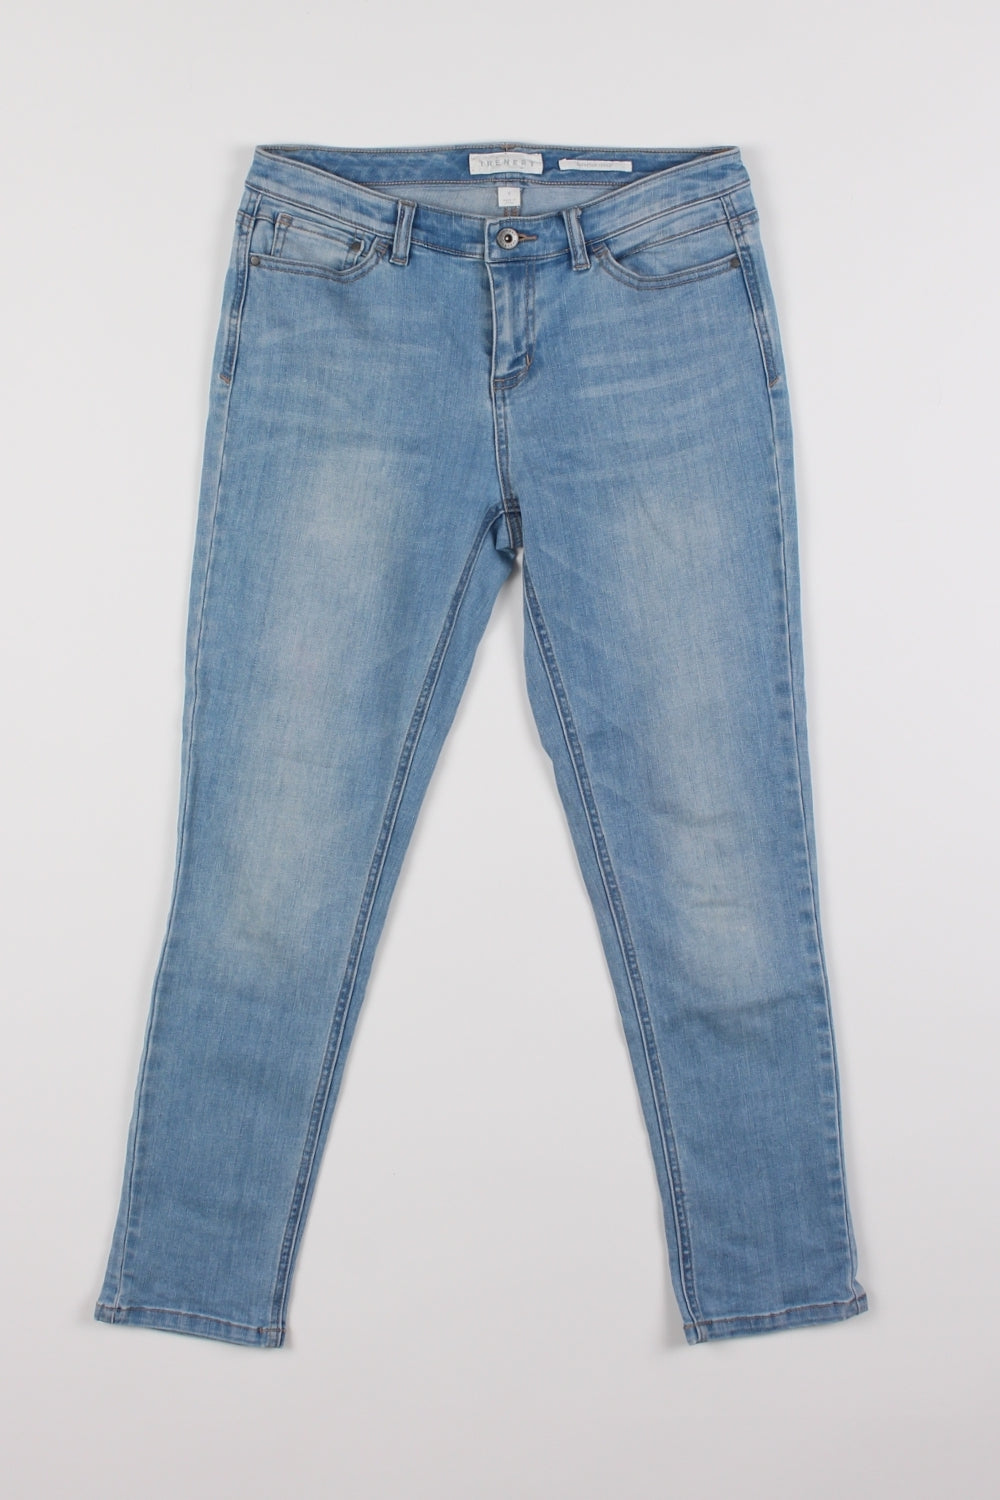 Trenery Blue Skinny Jeans AU 6